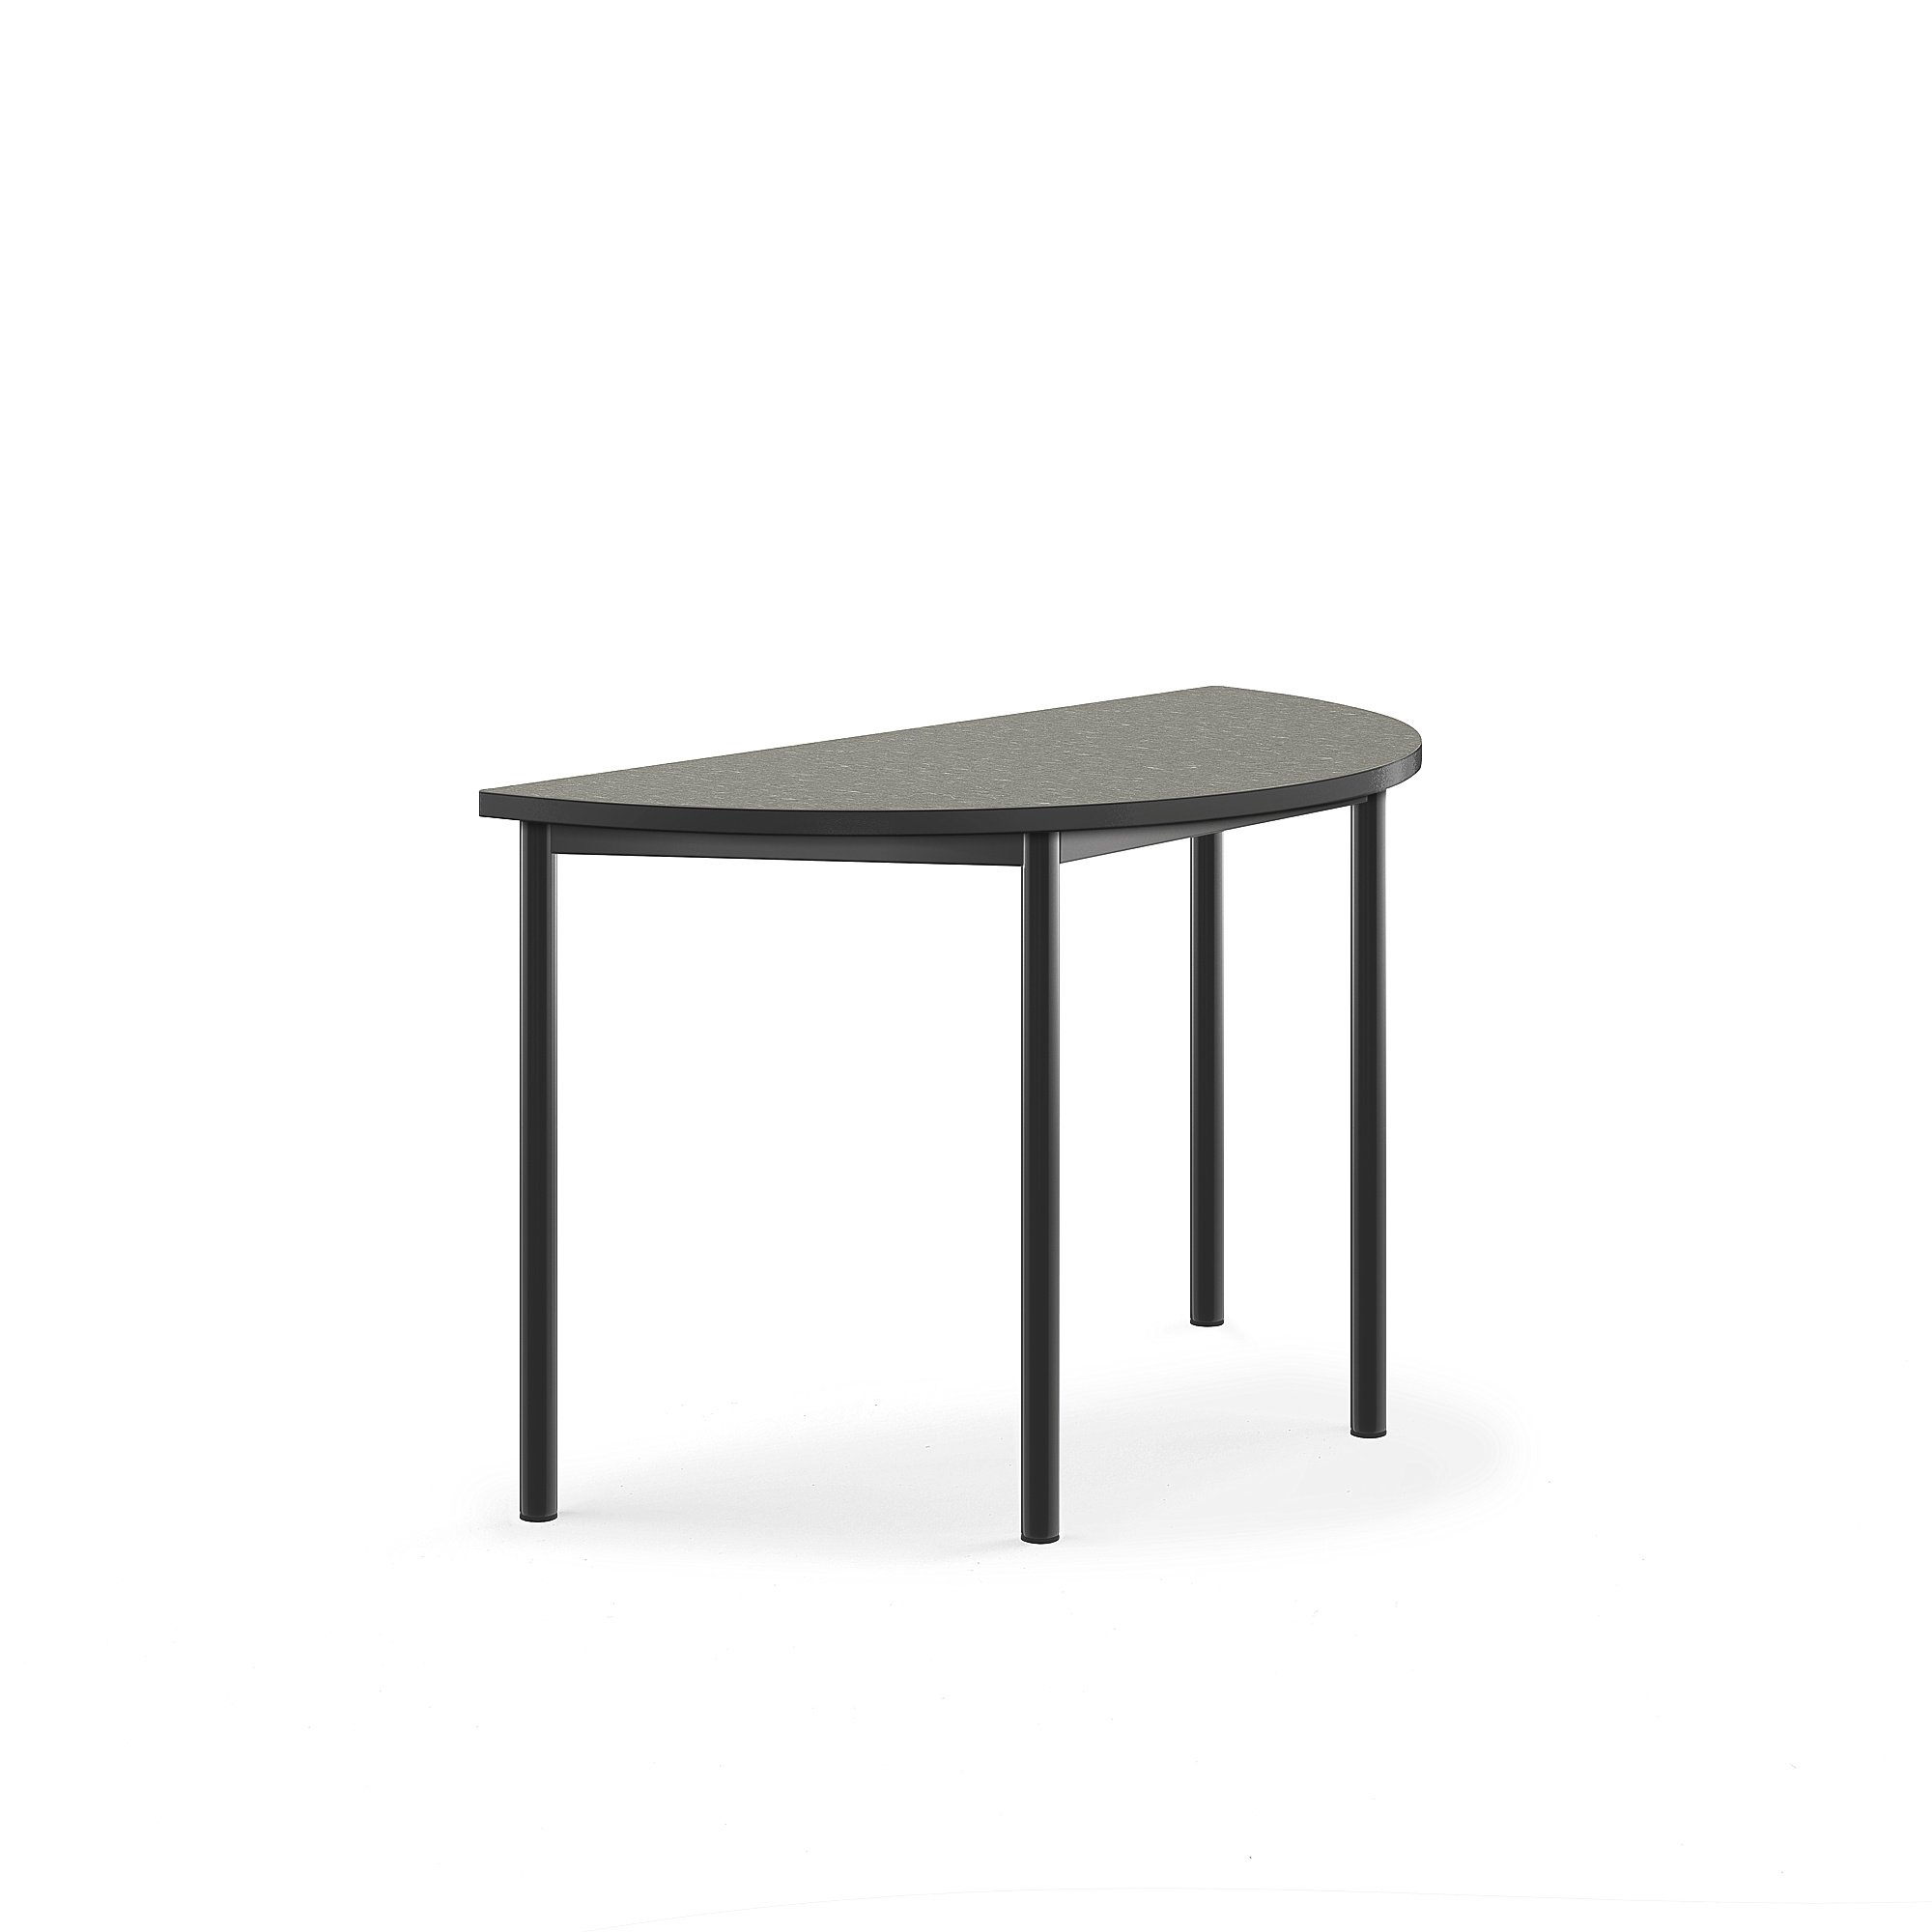 Stůl SONITUS, půlkruh, 1200x600x720 mm, antracitově šedé nohy, deska s linoleem, tmavě šedá